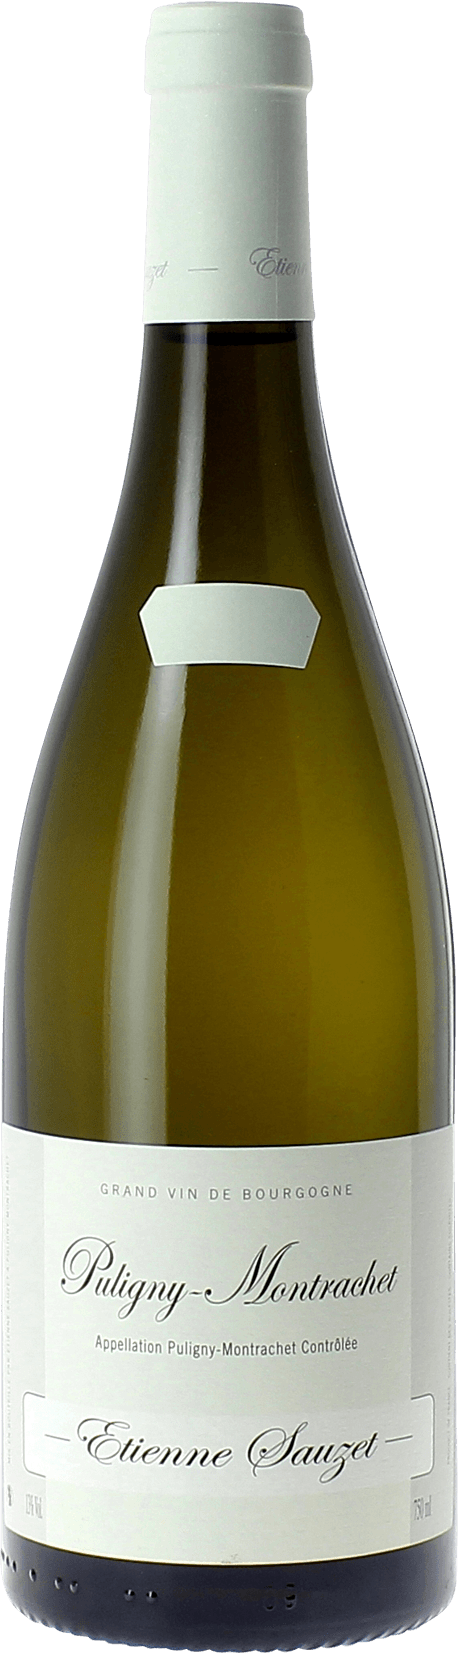 Puligny montrachet 2015 Domaine SAUZET, Bourgogne blanc